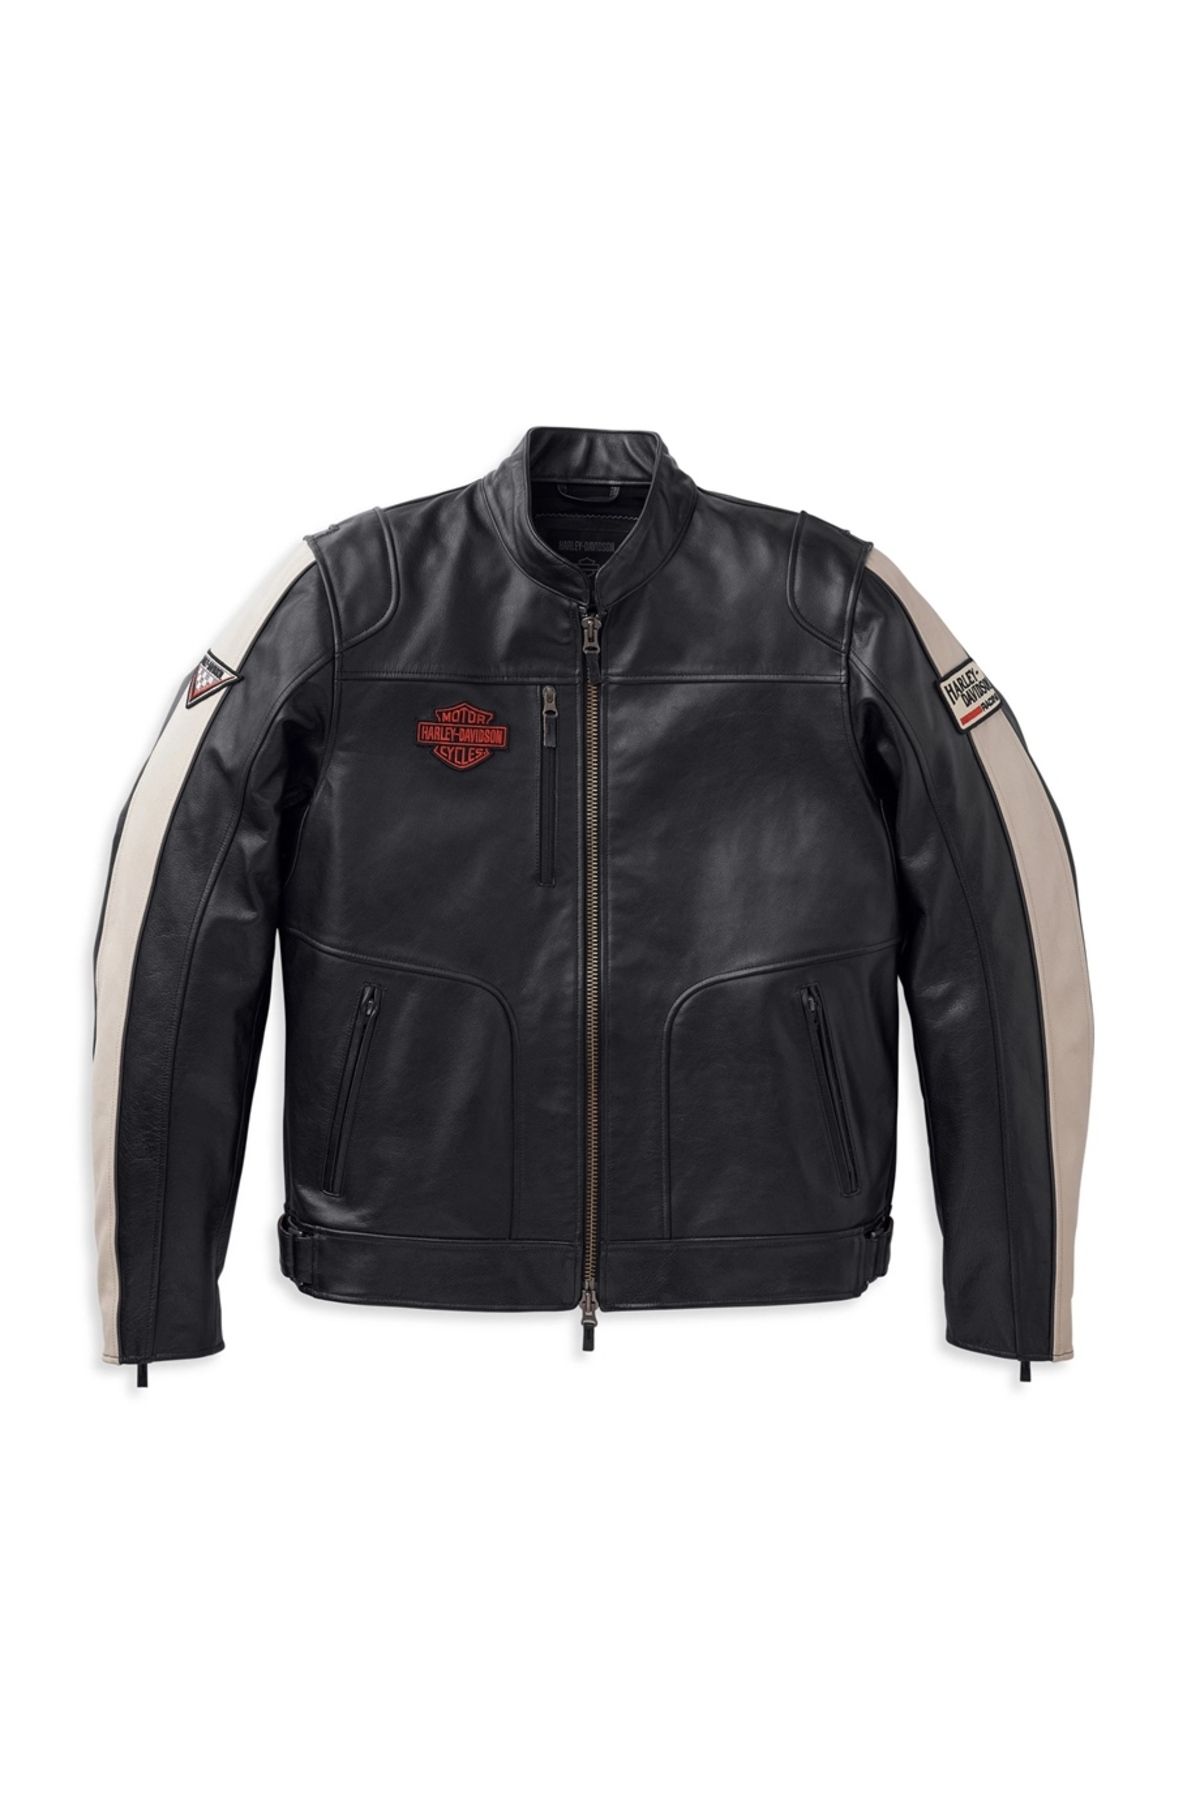 Harley Davidson Harley-davidson Men's Enduro Leather Riding Jacket